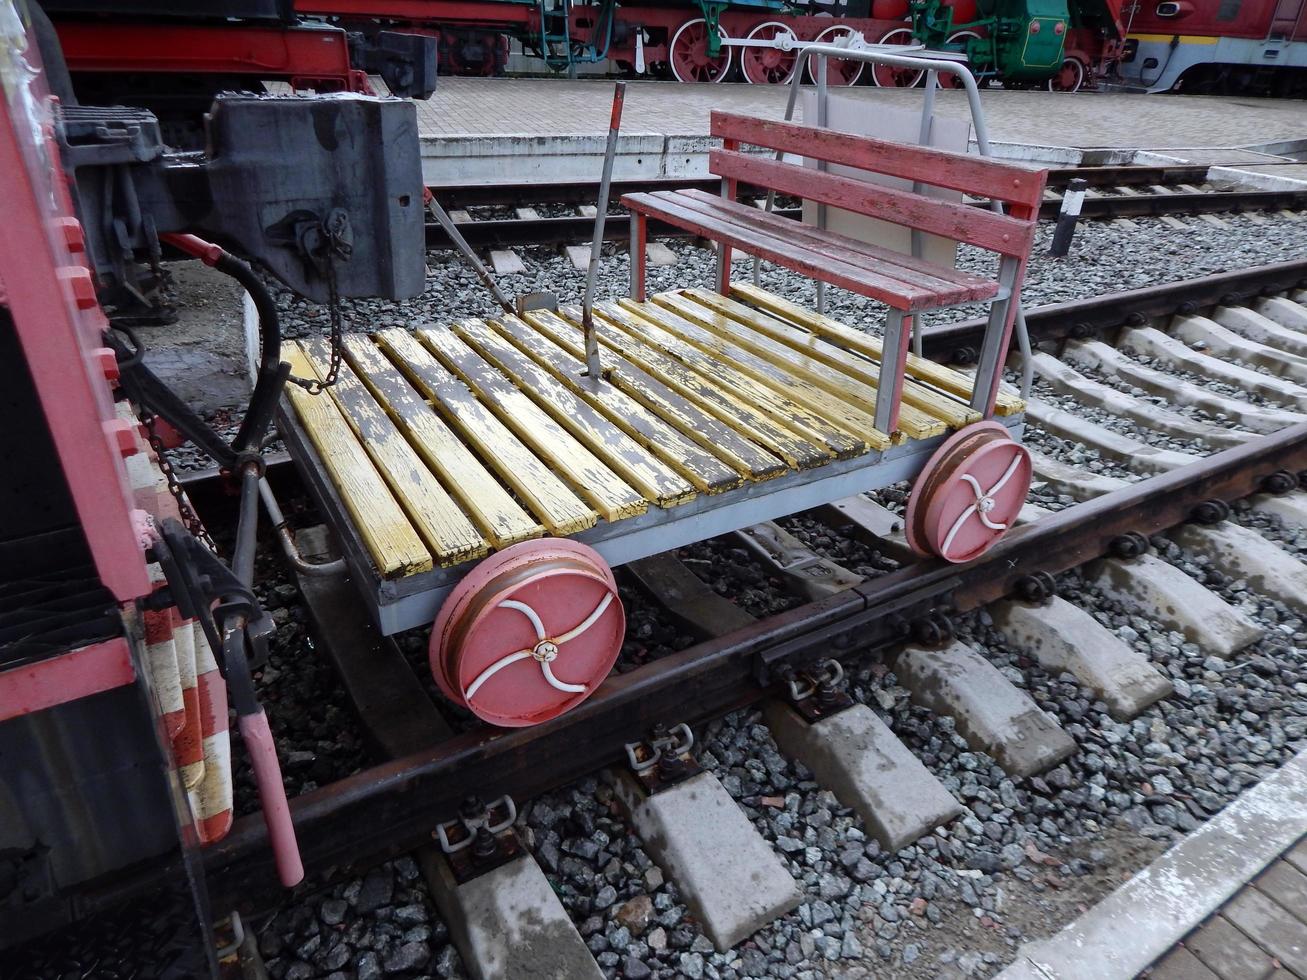 locomotiva ferroviária, vagões no trem foto